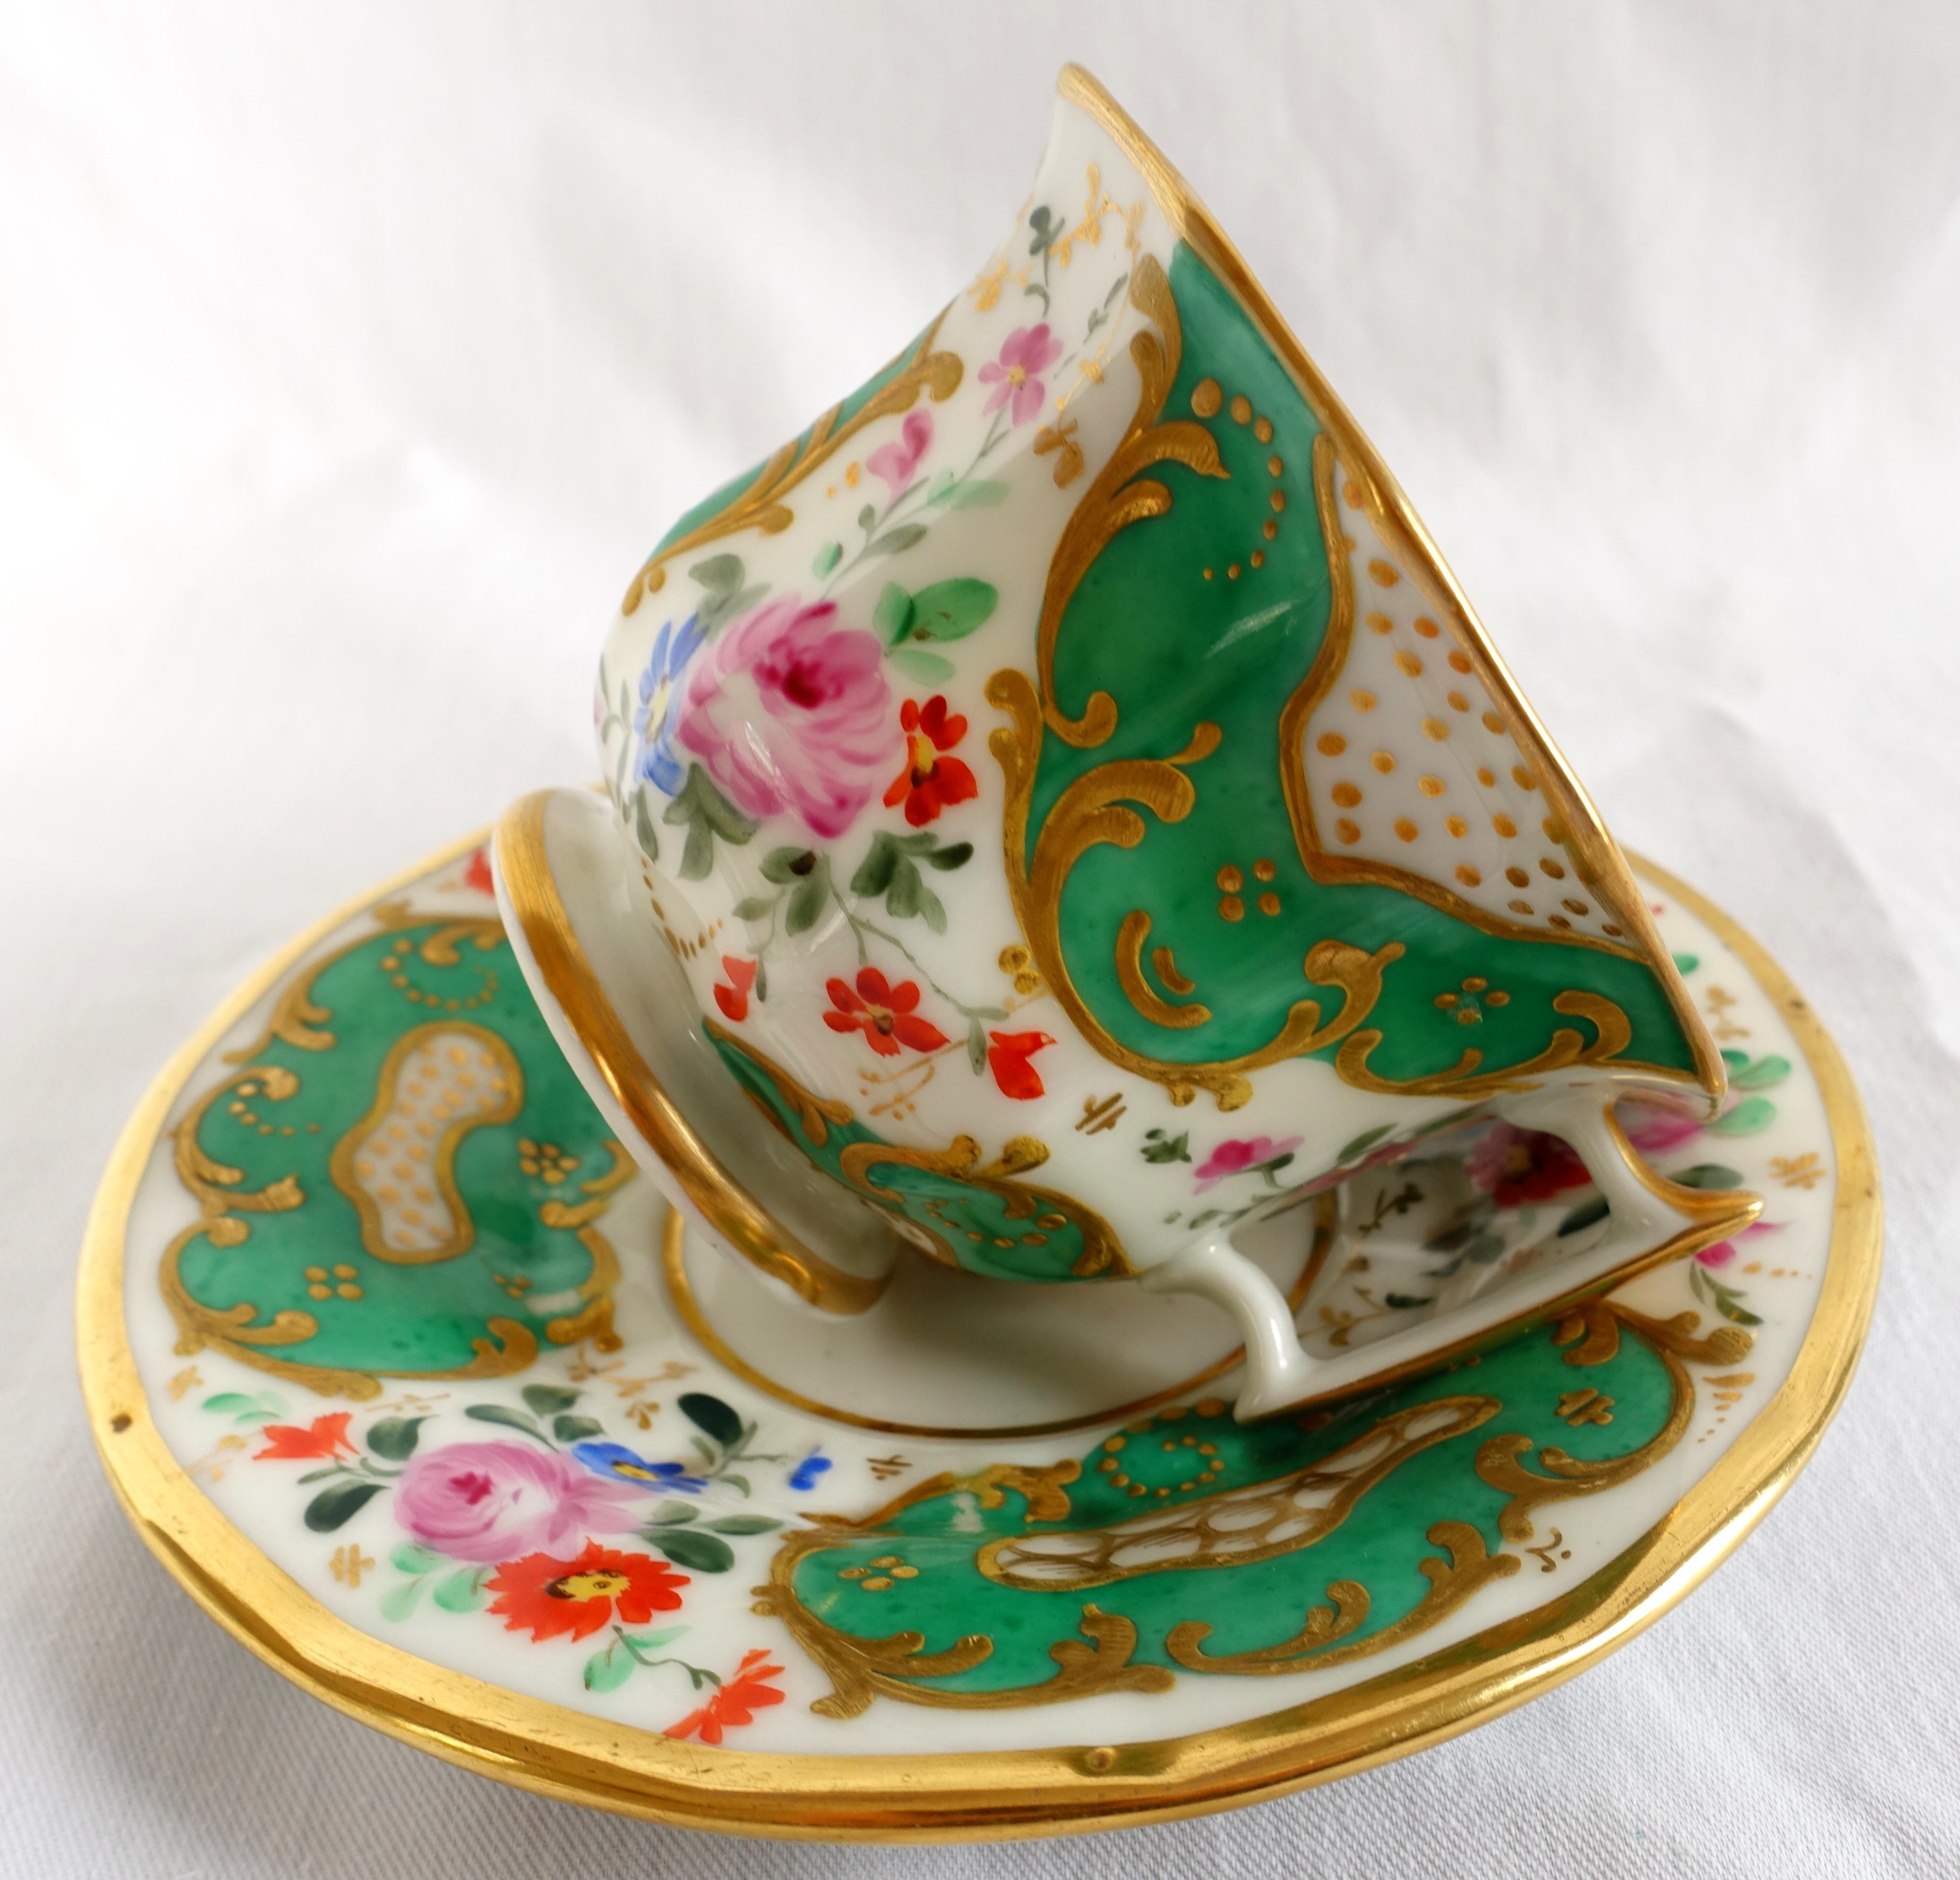 Antique French Paris porcelain coffee set for 6 - cups & saucers - 19th century 3